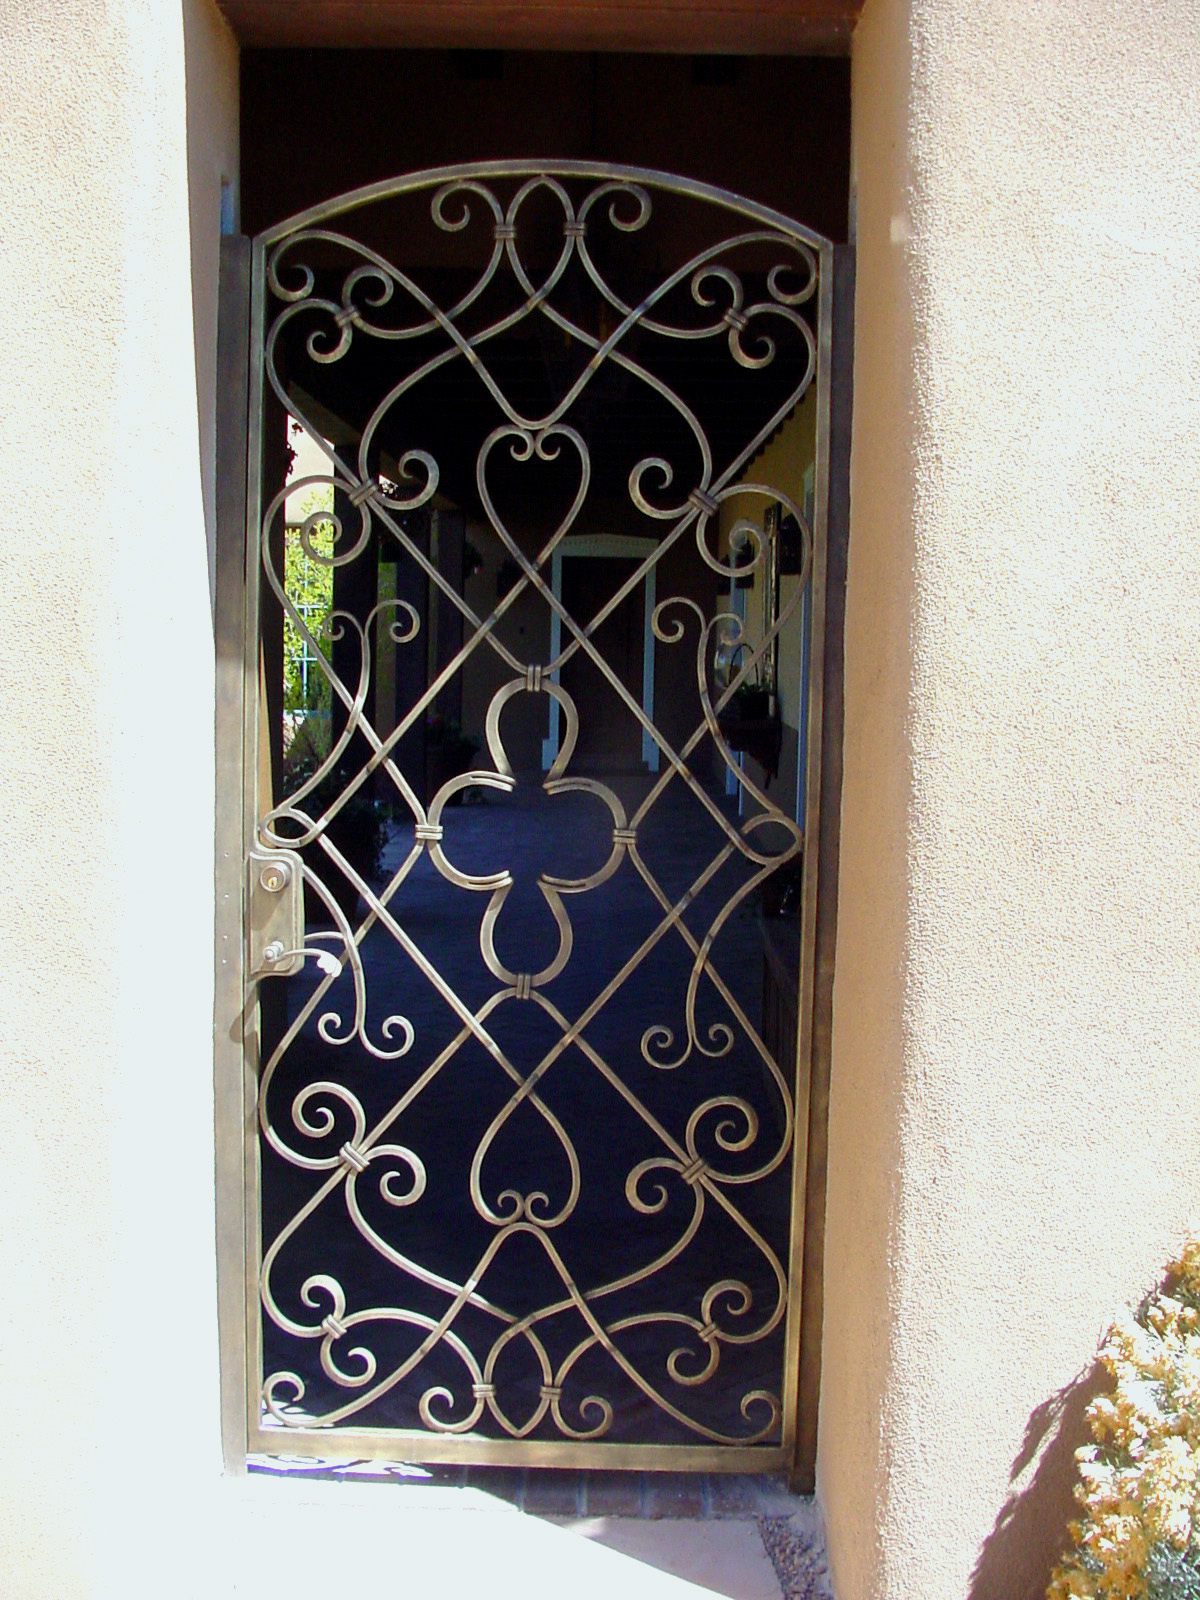 Forged Iron Entry Gate with Bronze powder coat finish. Santa Fe, NM